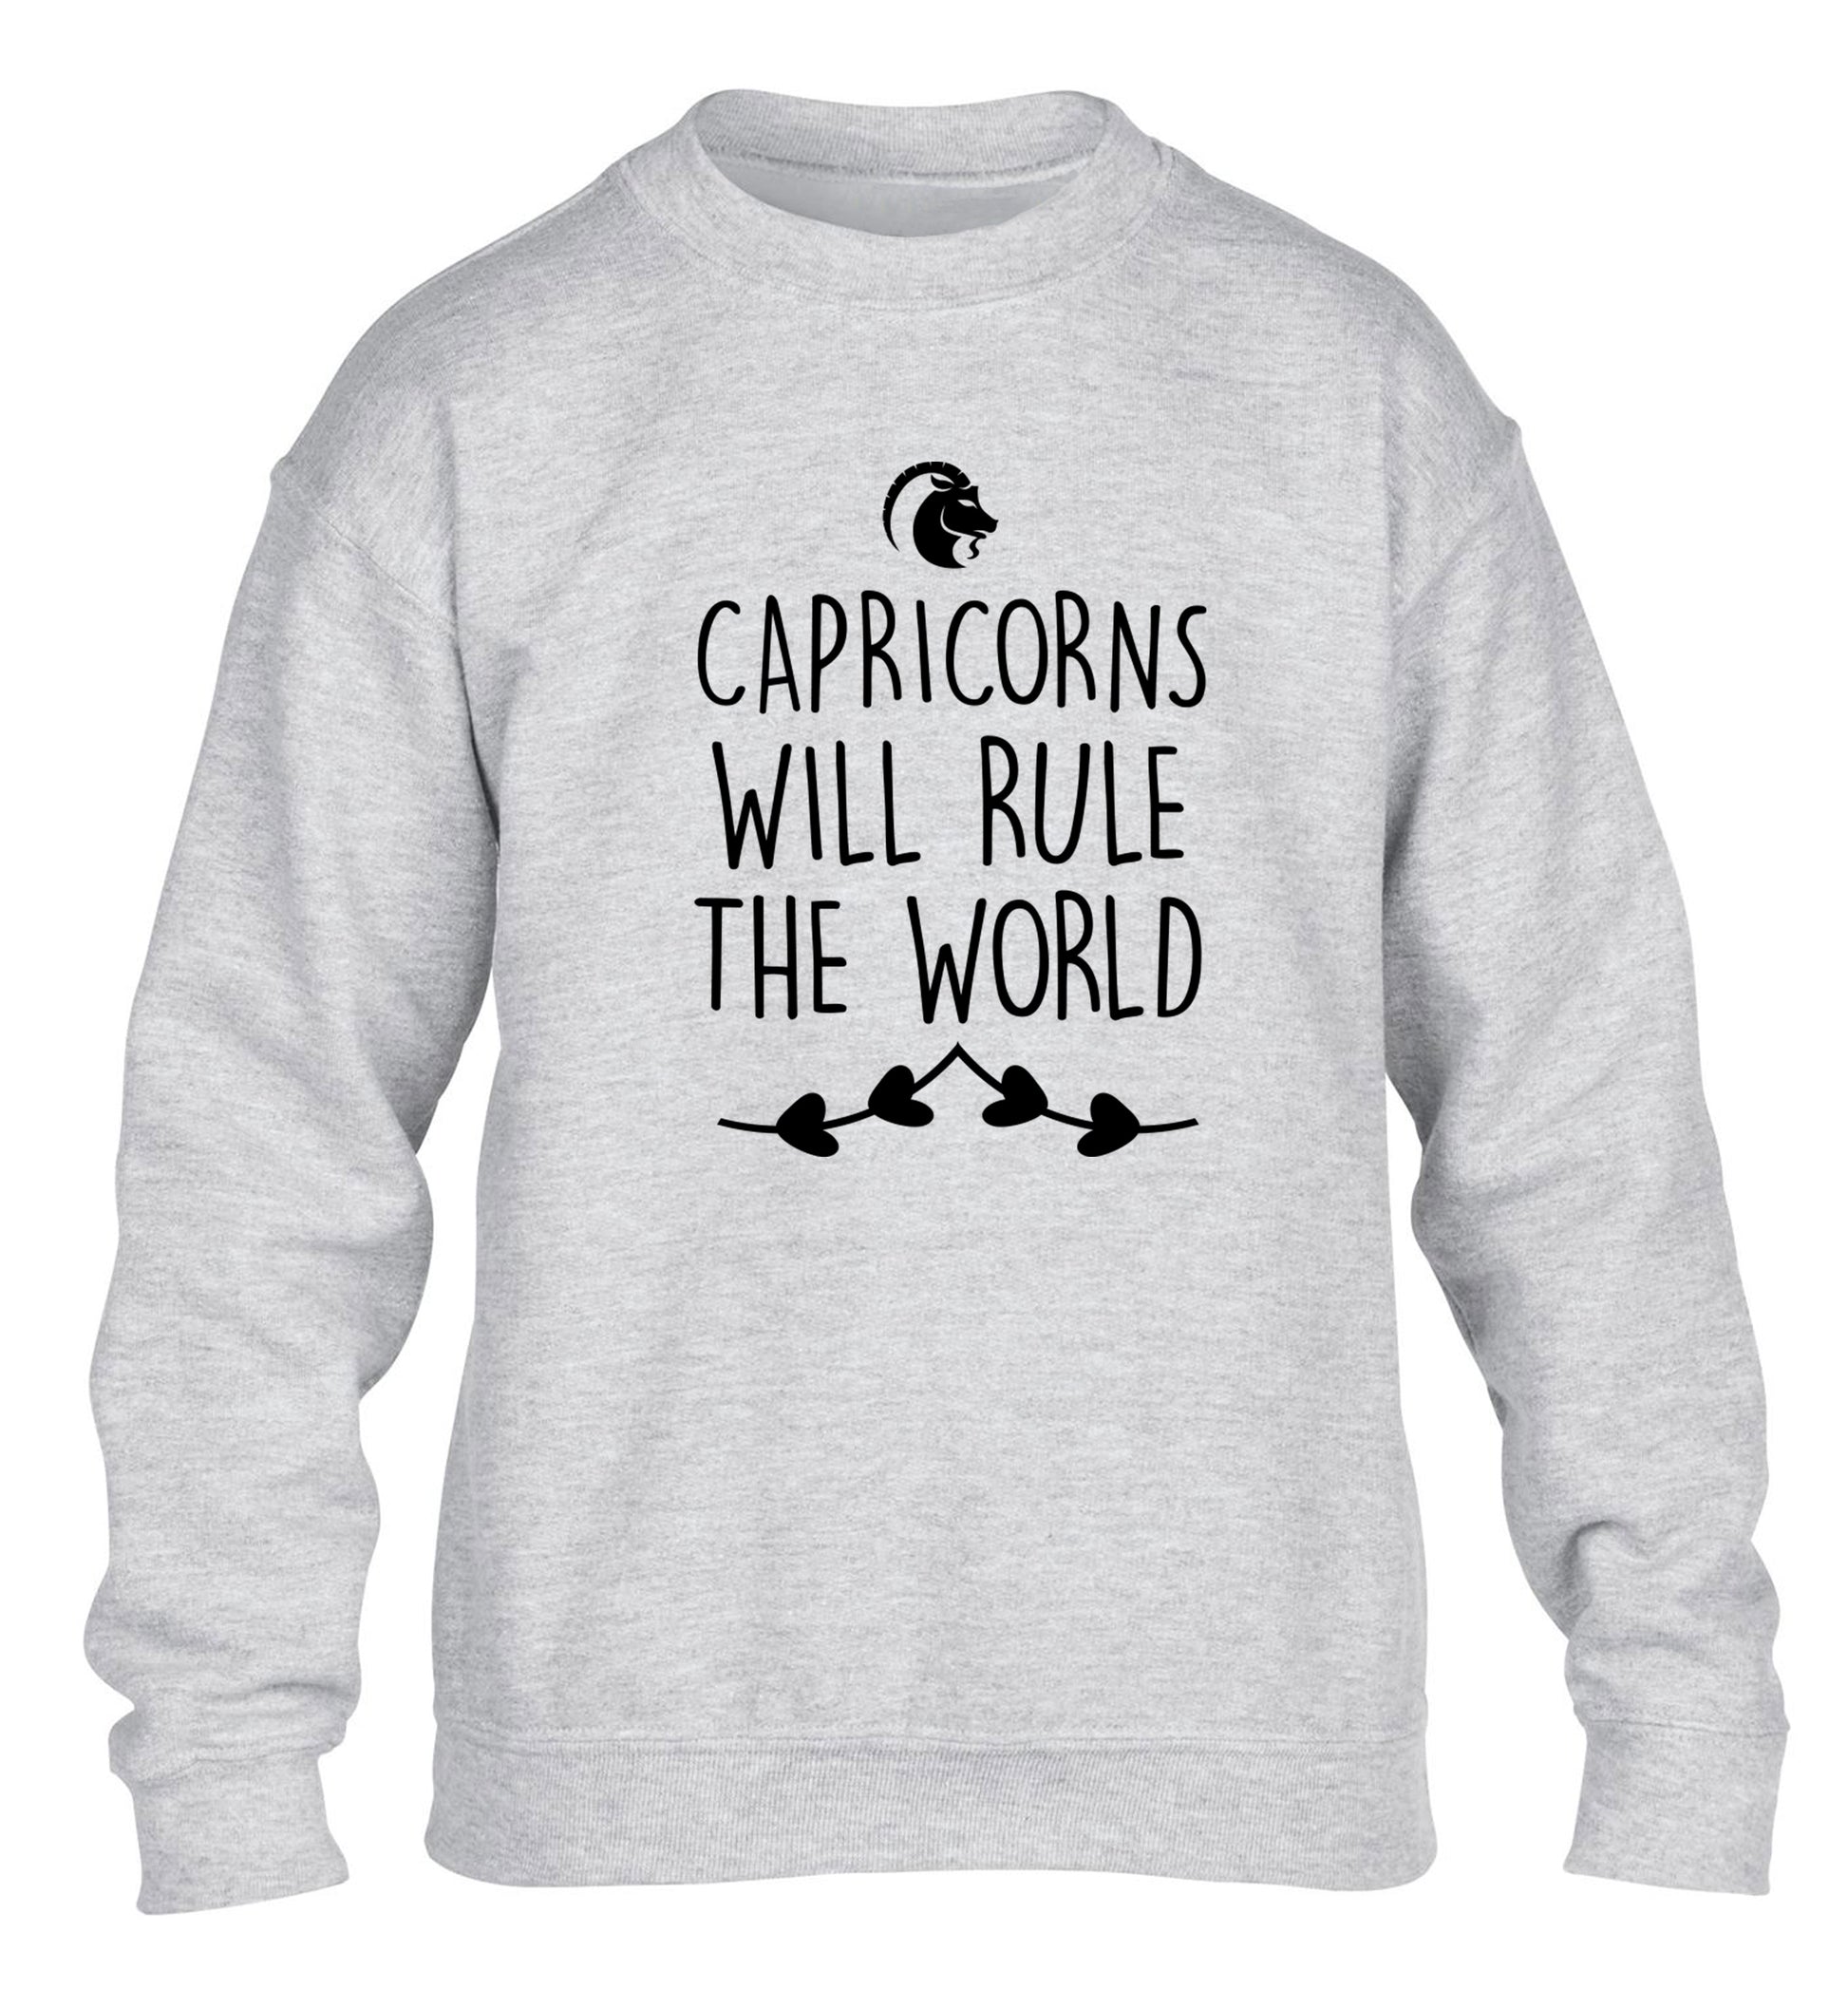 Capricorns will rule the world children's grey sweater 12-13 Years